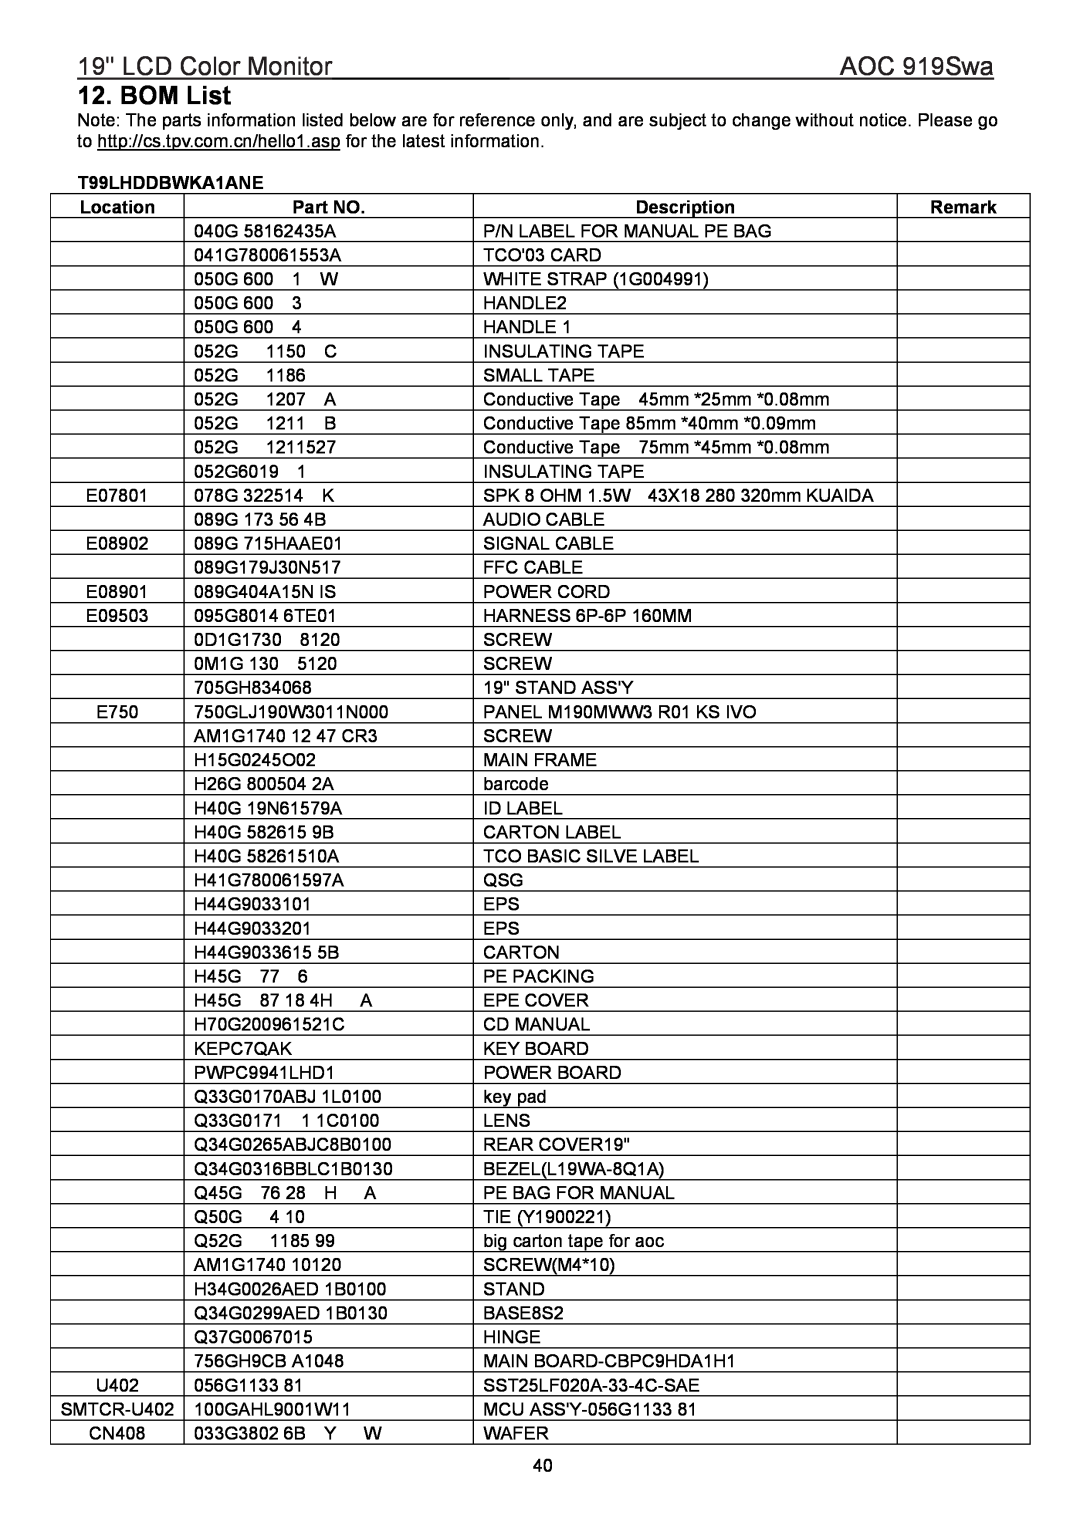 AOC 919SWA manual BOM List, LCD Color Monitor, AOC 919Swa, T99LHDDBWKA1ANE, Location, Description, Remark 